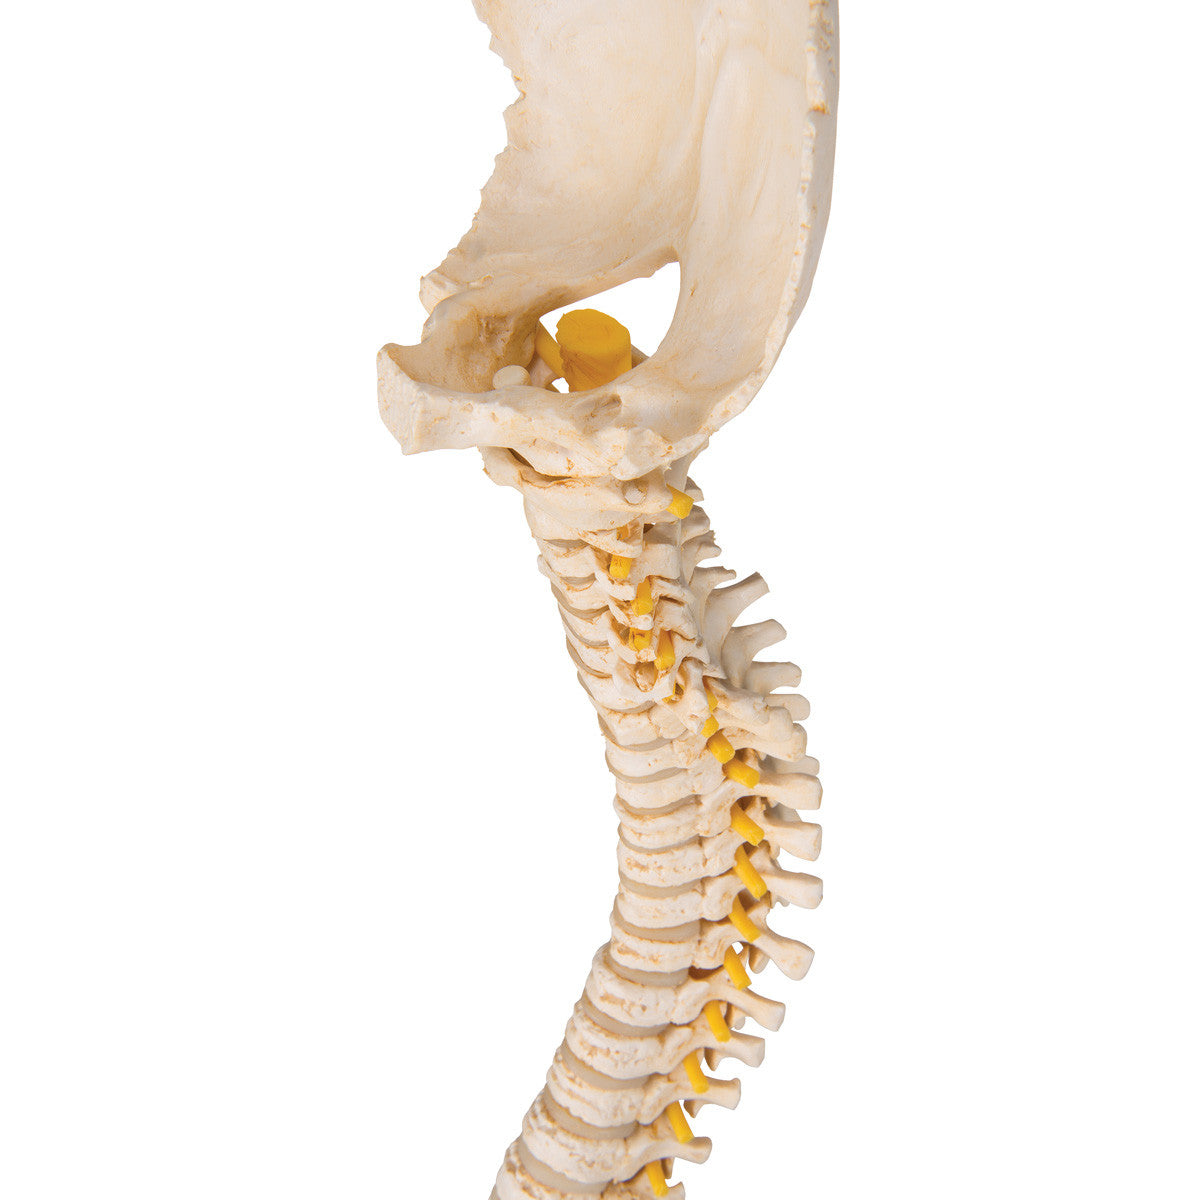 a52_05_1200_1200_bonelike-childs-vertebral-column-model-3b-smart-anatomy__94898.1589753189.1280.1280.jpg